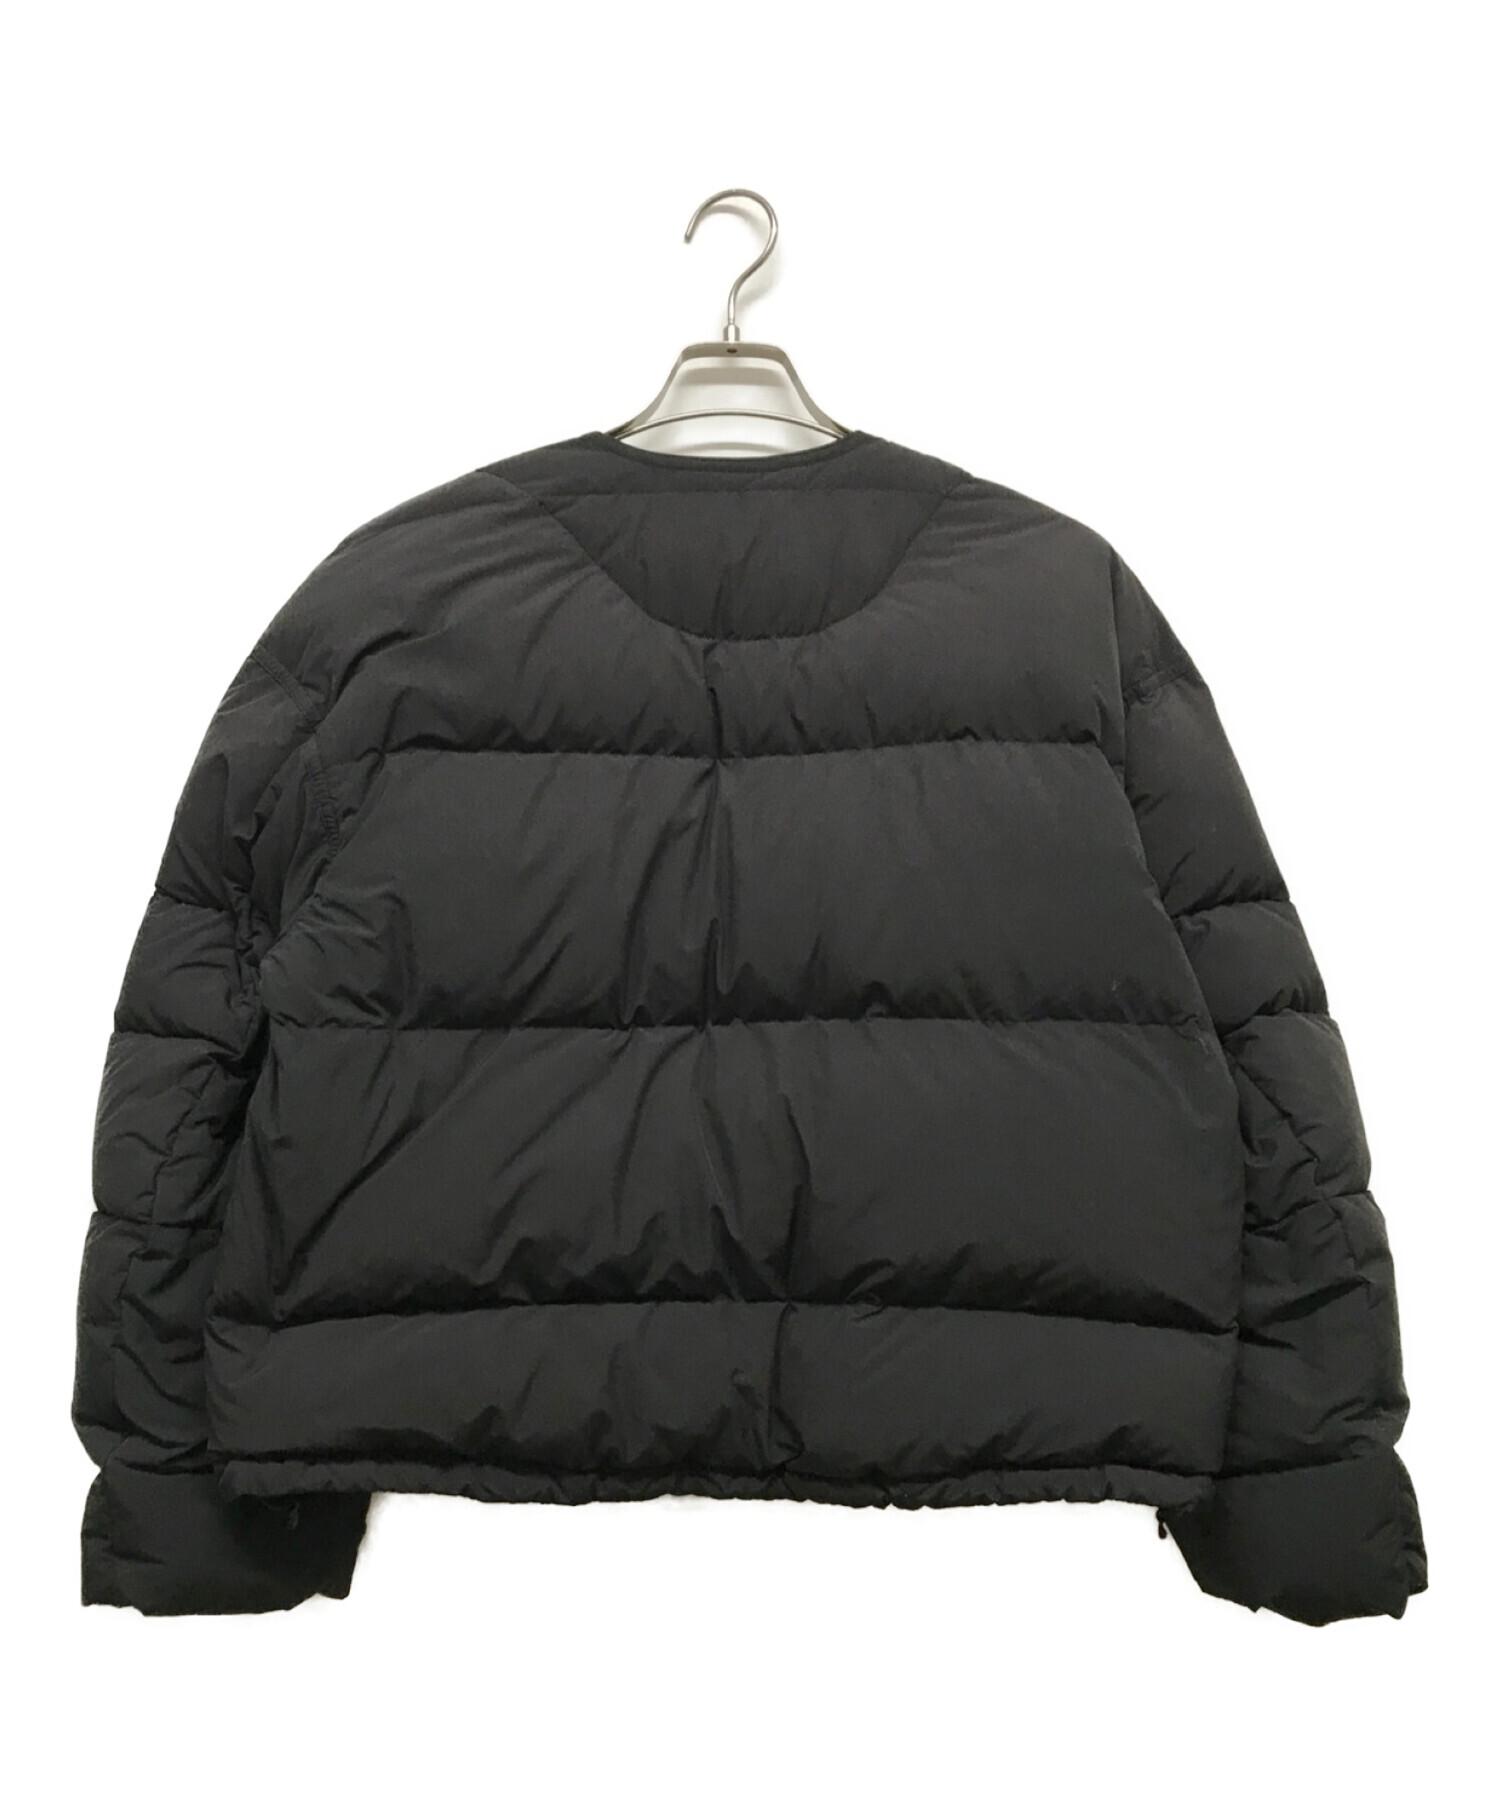 MACPHEE (マカフィー) ダウンジャケット ブラック サイズ:S